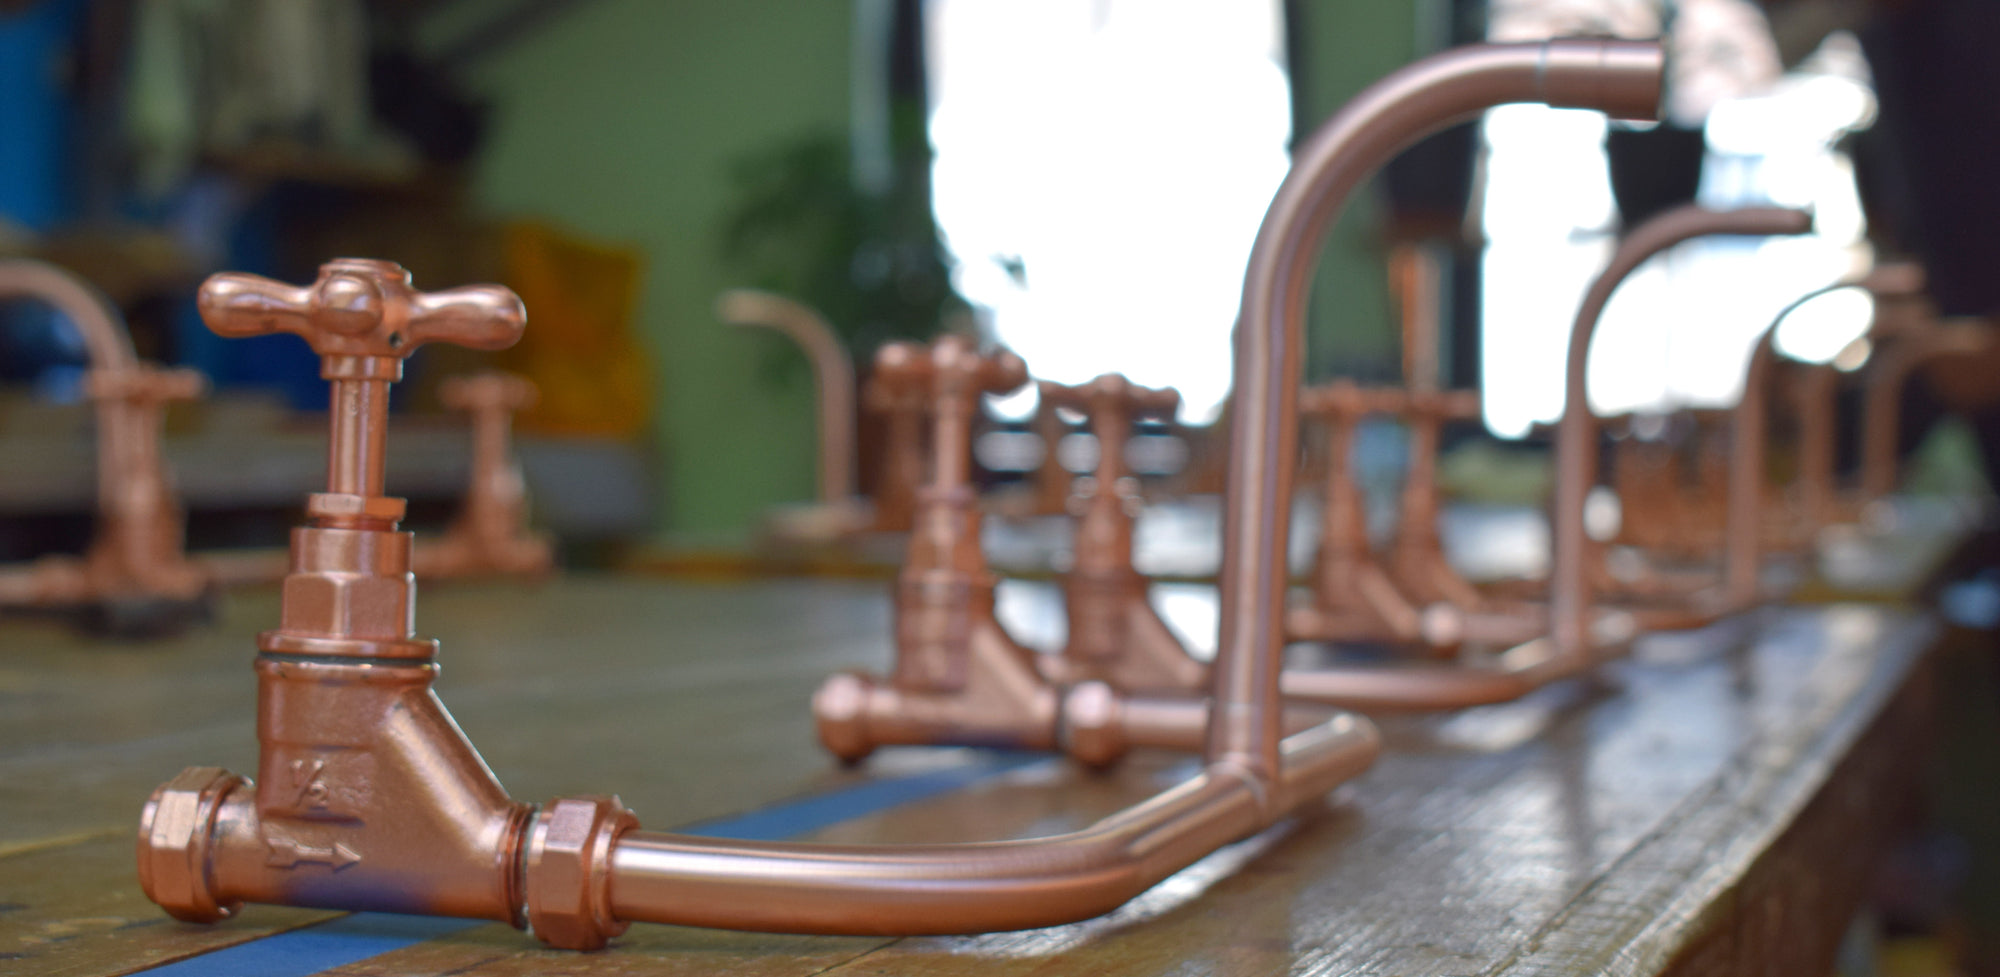 Custom taps UK with Proper Copper Design